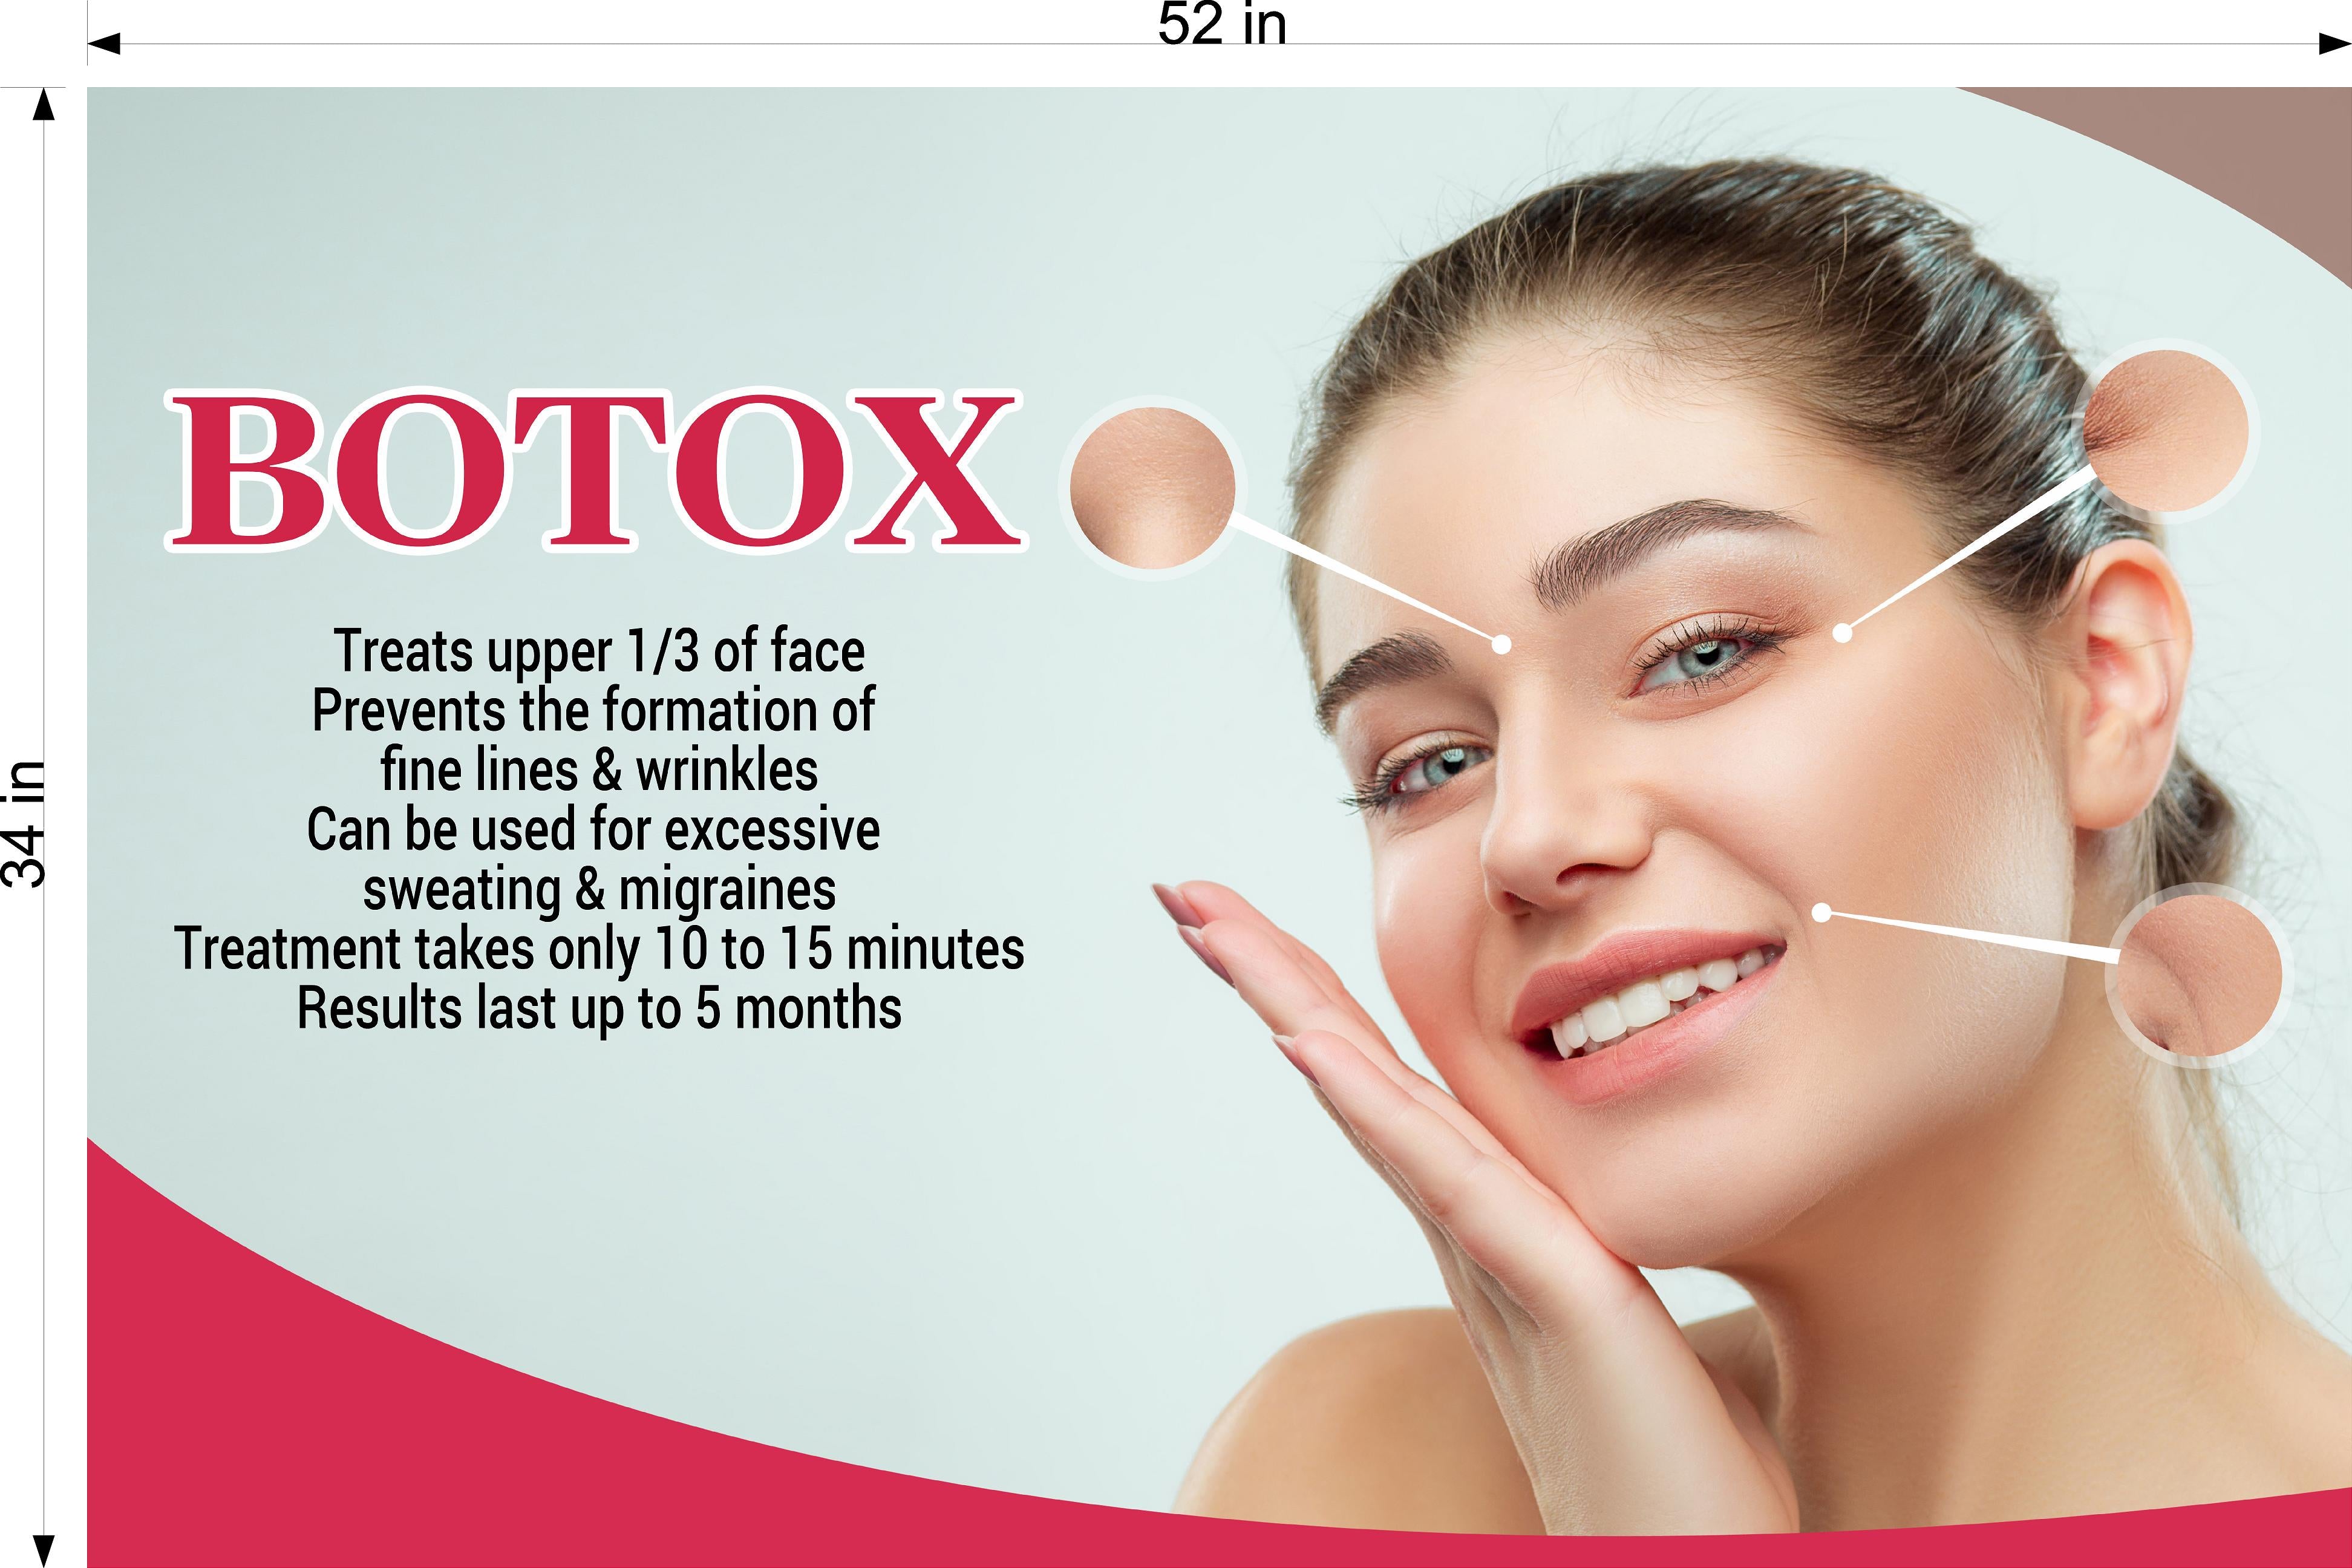 Botox 09 Wallpaper Poster with Adhesive Backing Wall Sticker Decor Indoors Interior Sign Horizontal